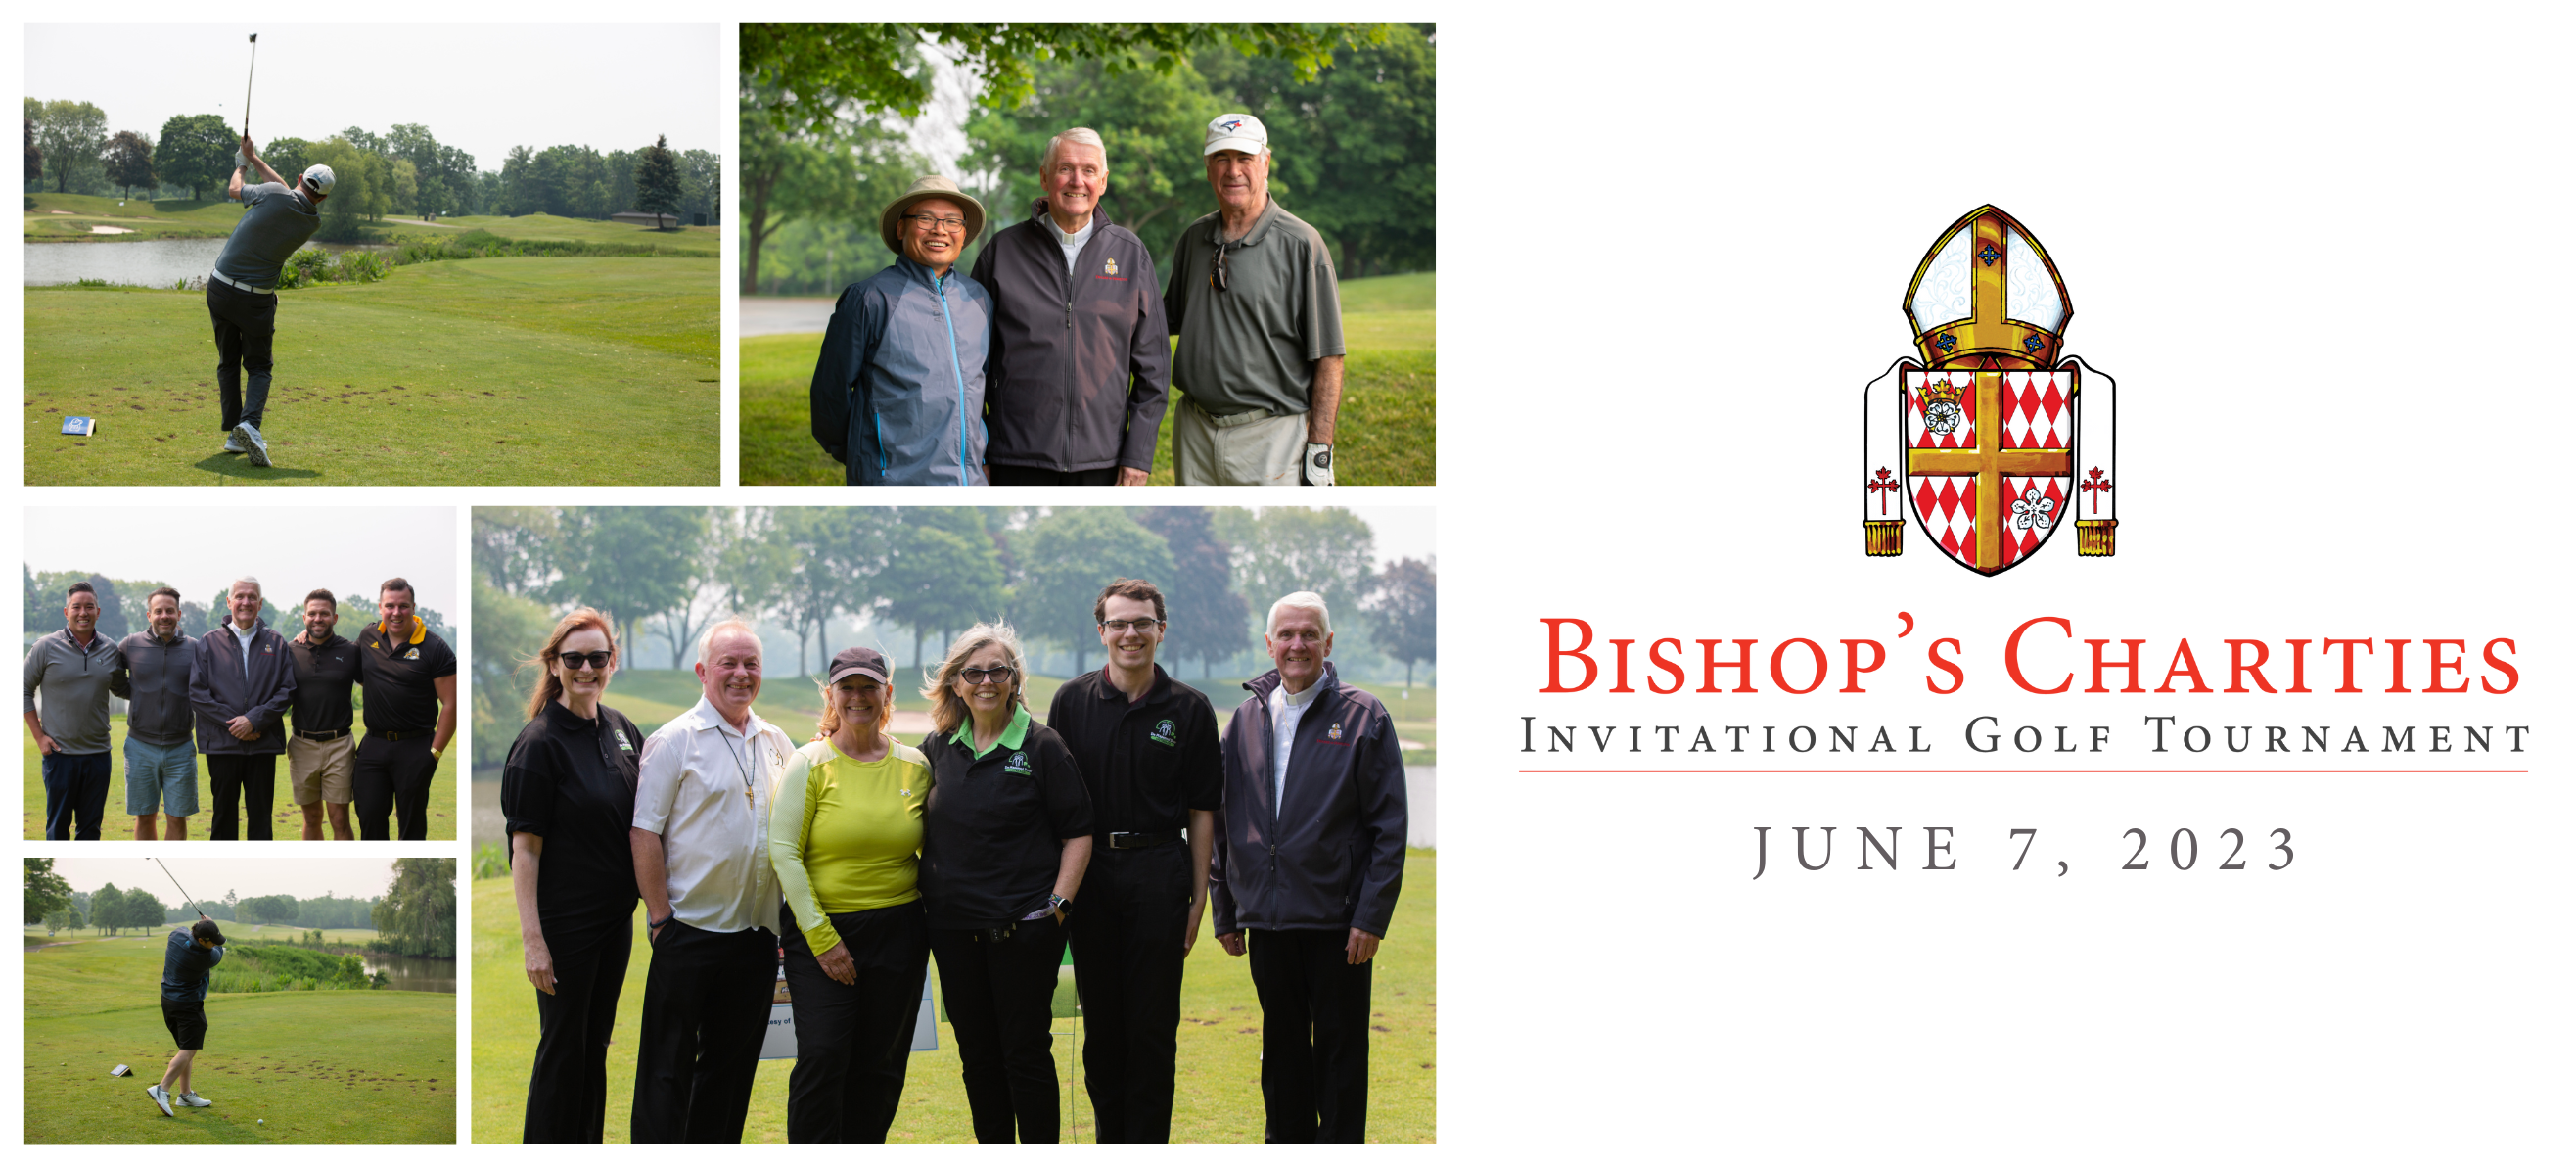 2023 Bishop's Charities Invitational Golf Tournament